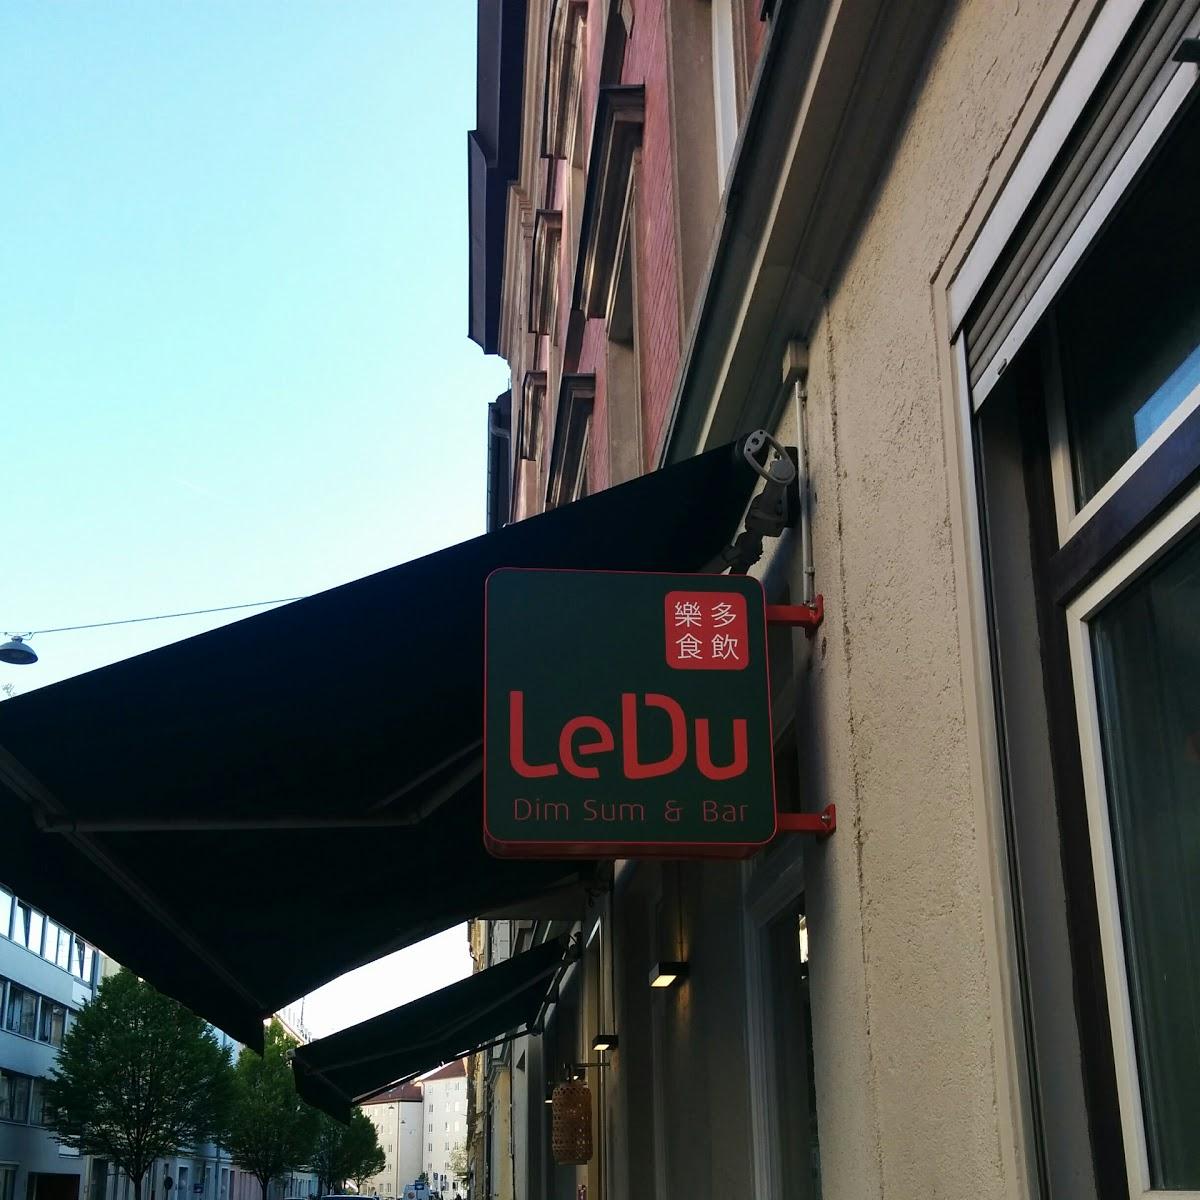 Restaurant "LeDu Dim Sum & Bar" in München